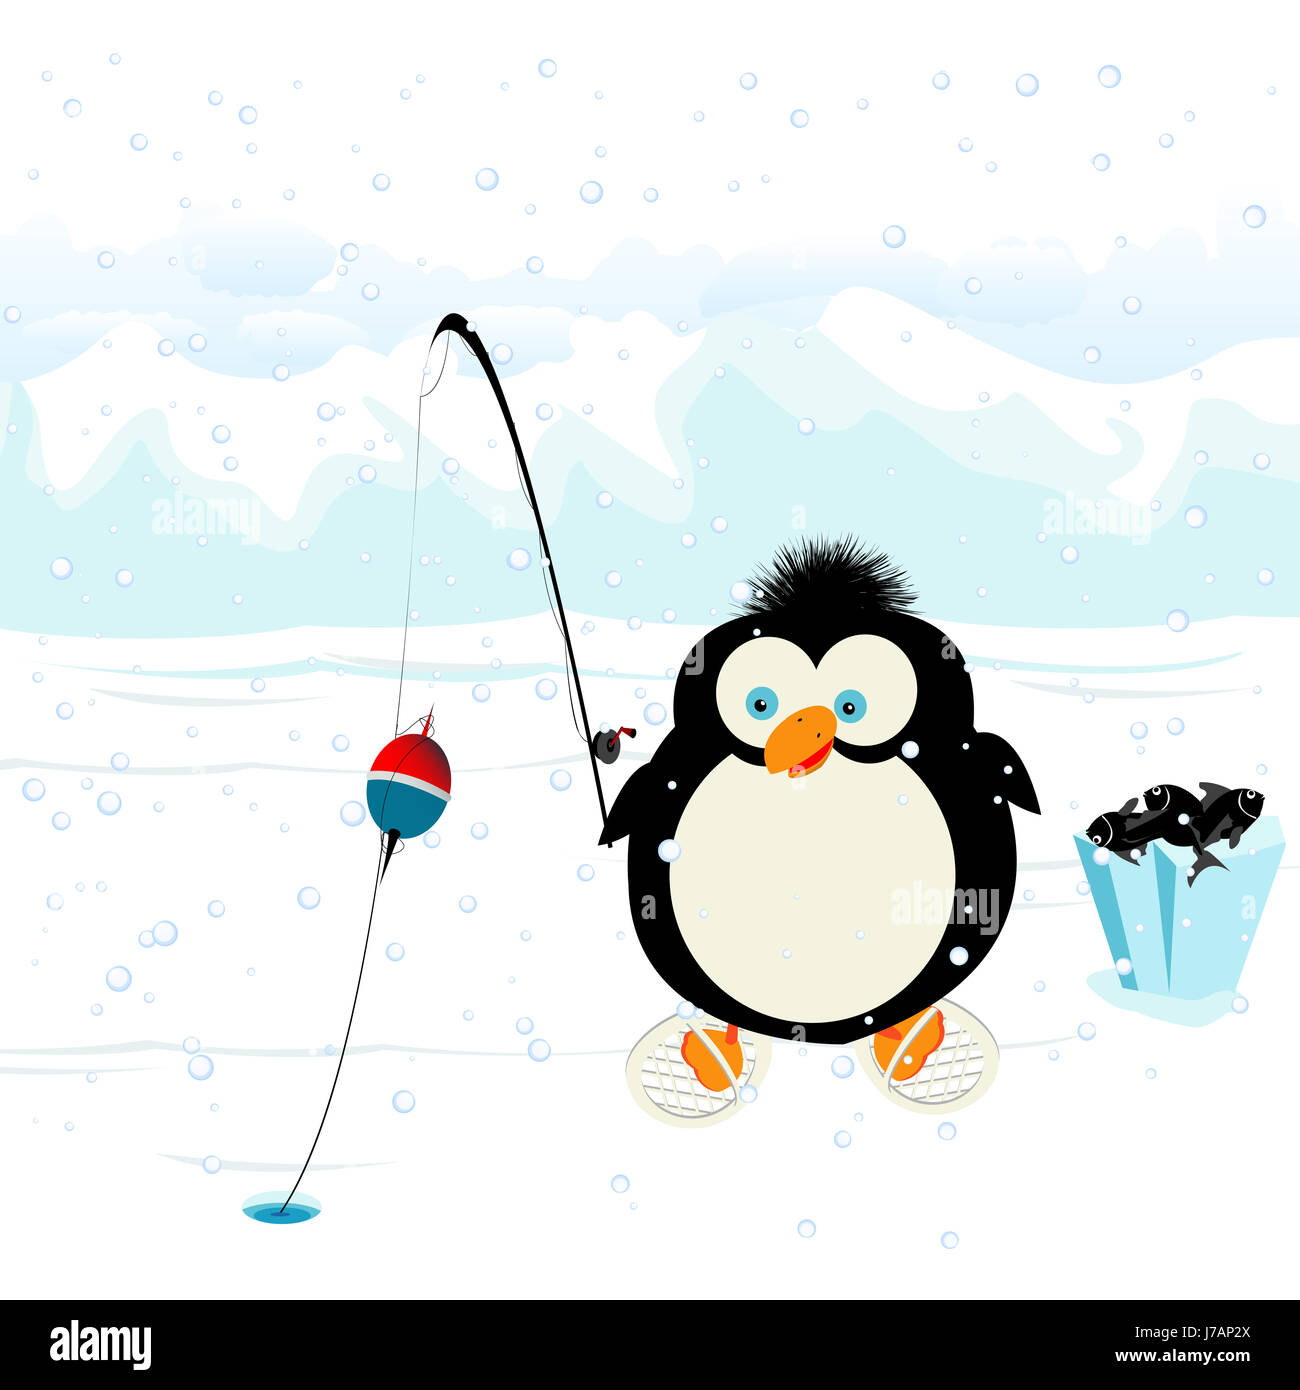 art bird fish penguin illustration fishing artistic backdrop background art Stock Photo